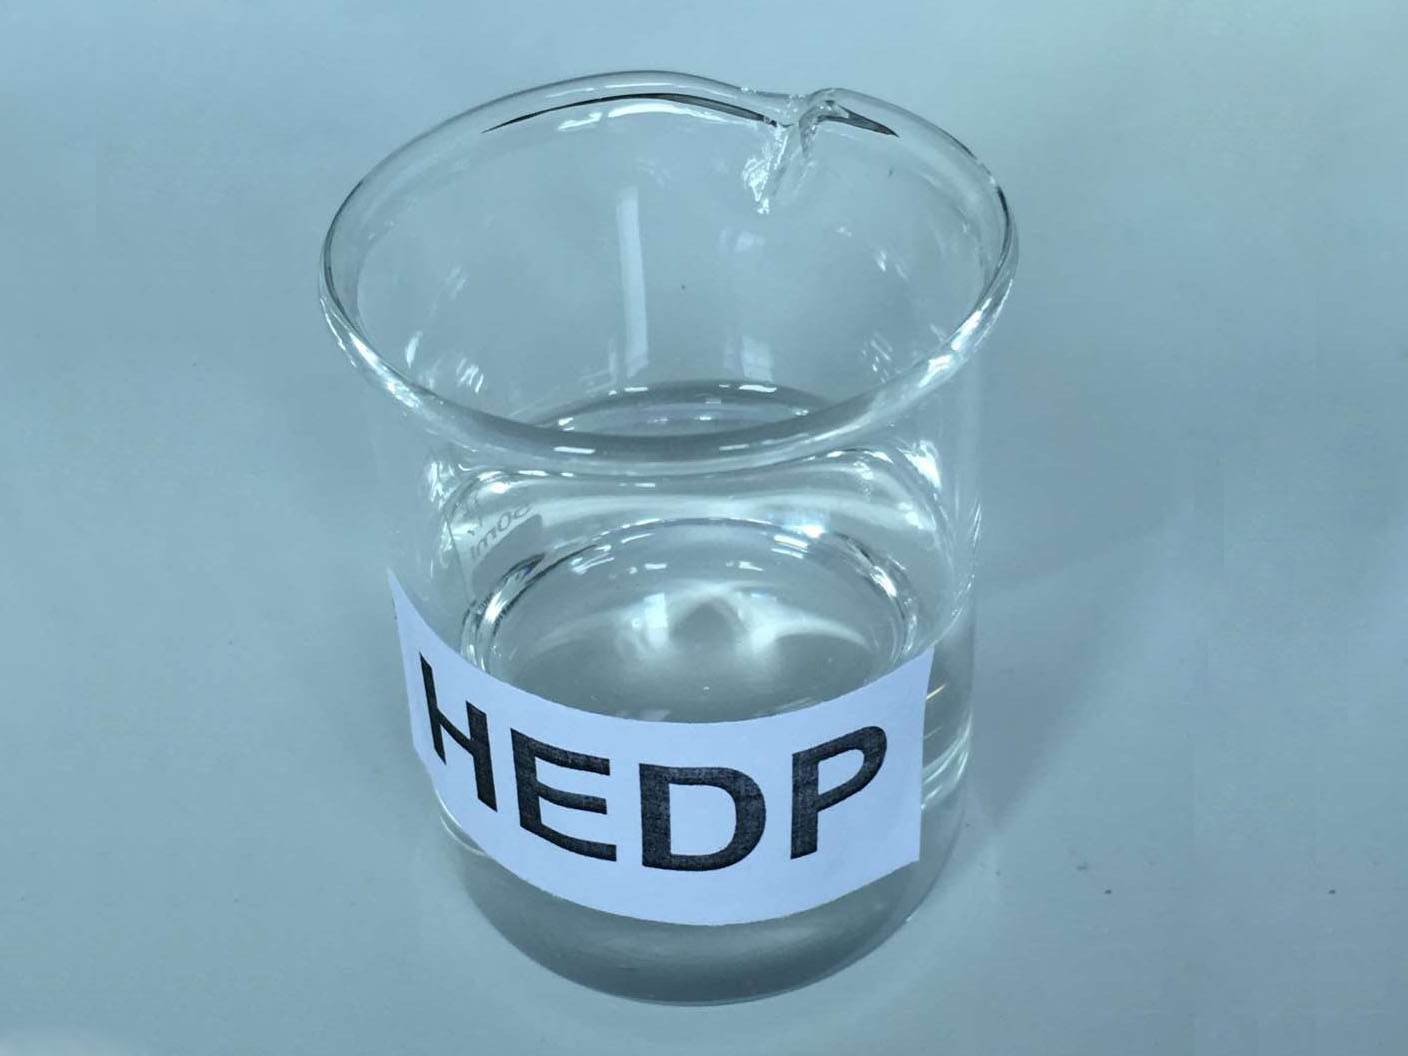 HEDP